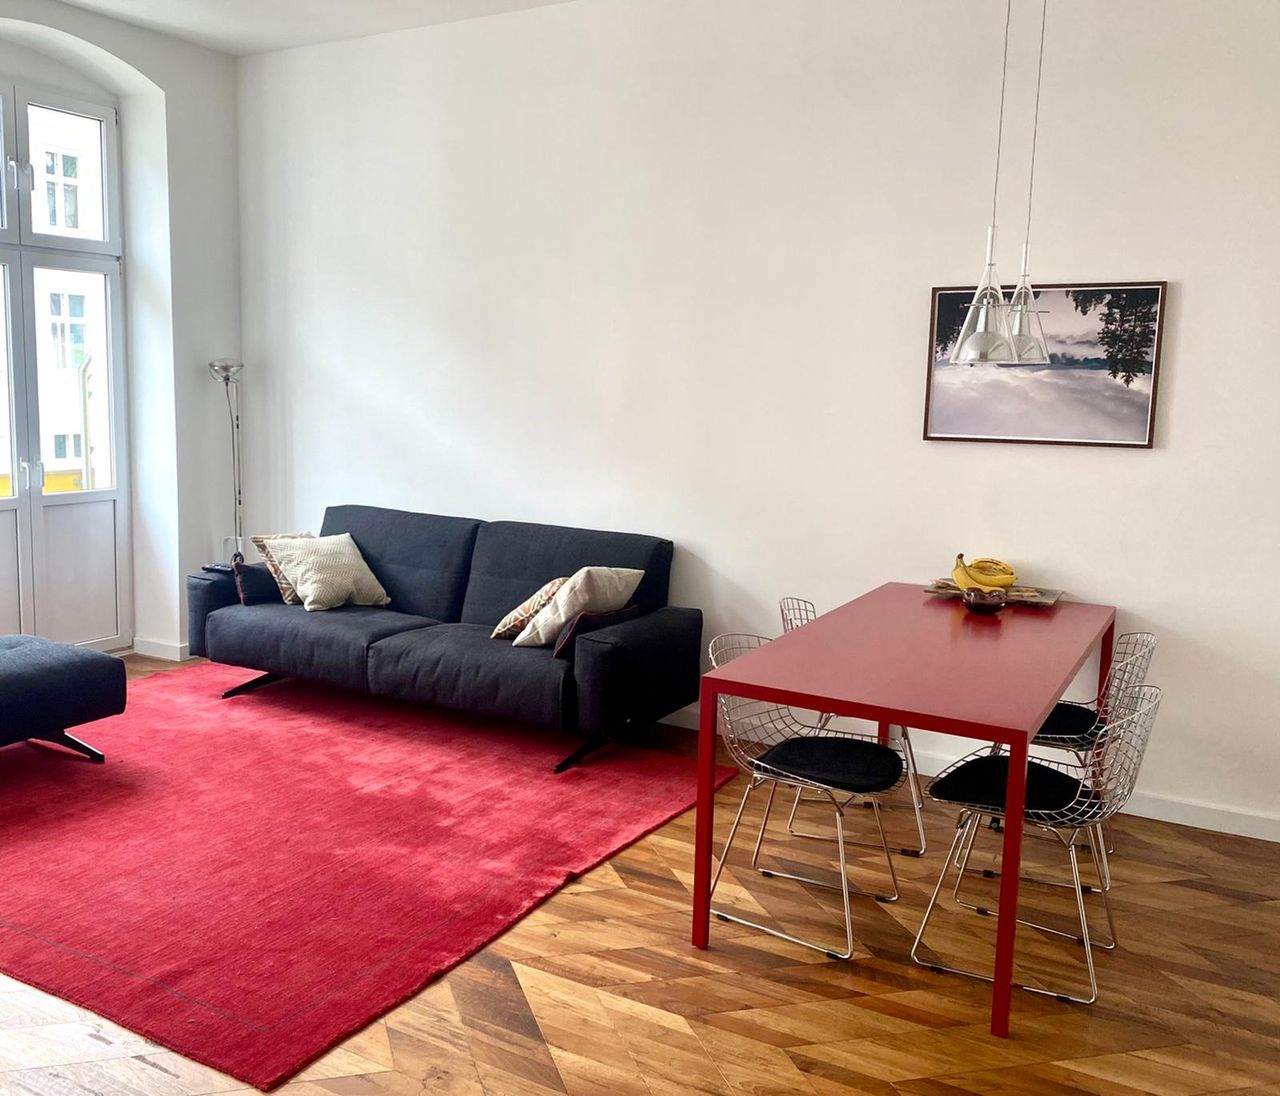 Fashionable & new flat in Prenzlauer Berg